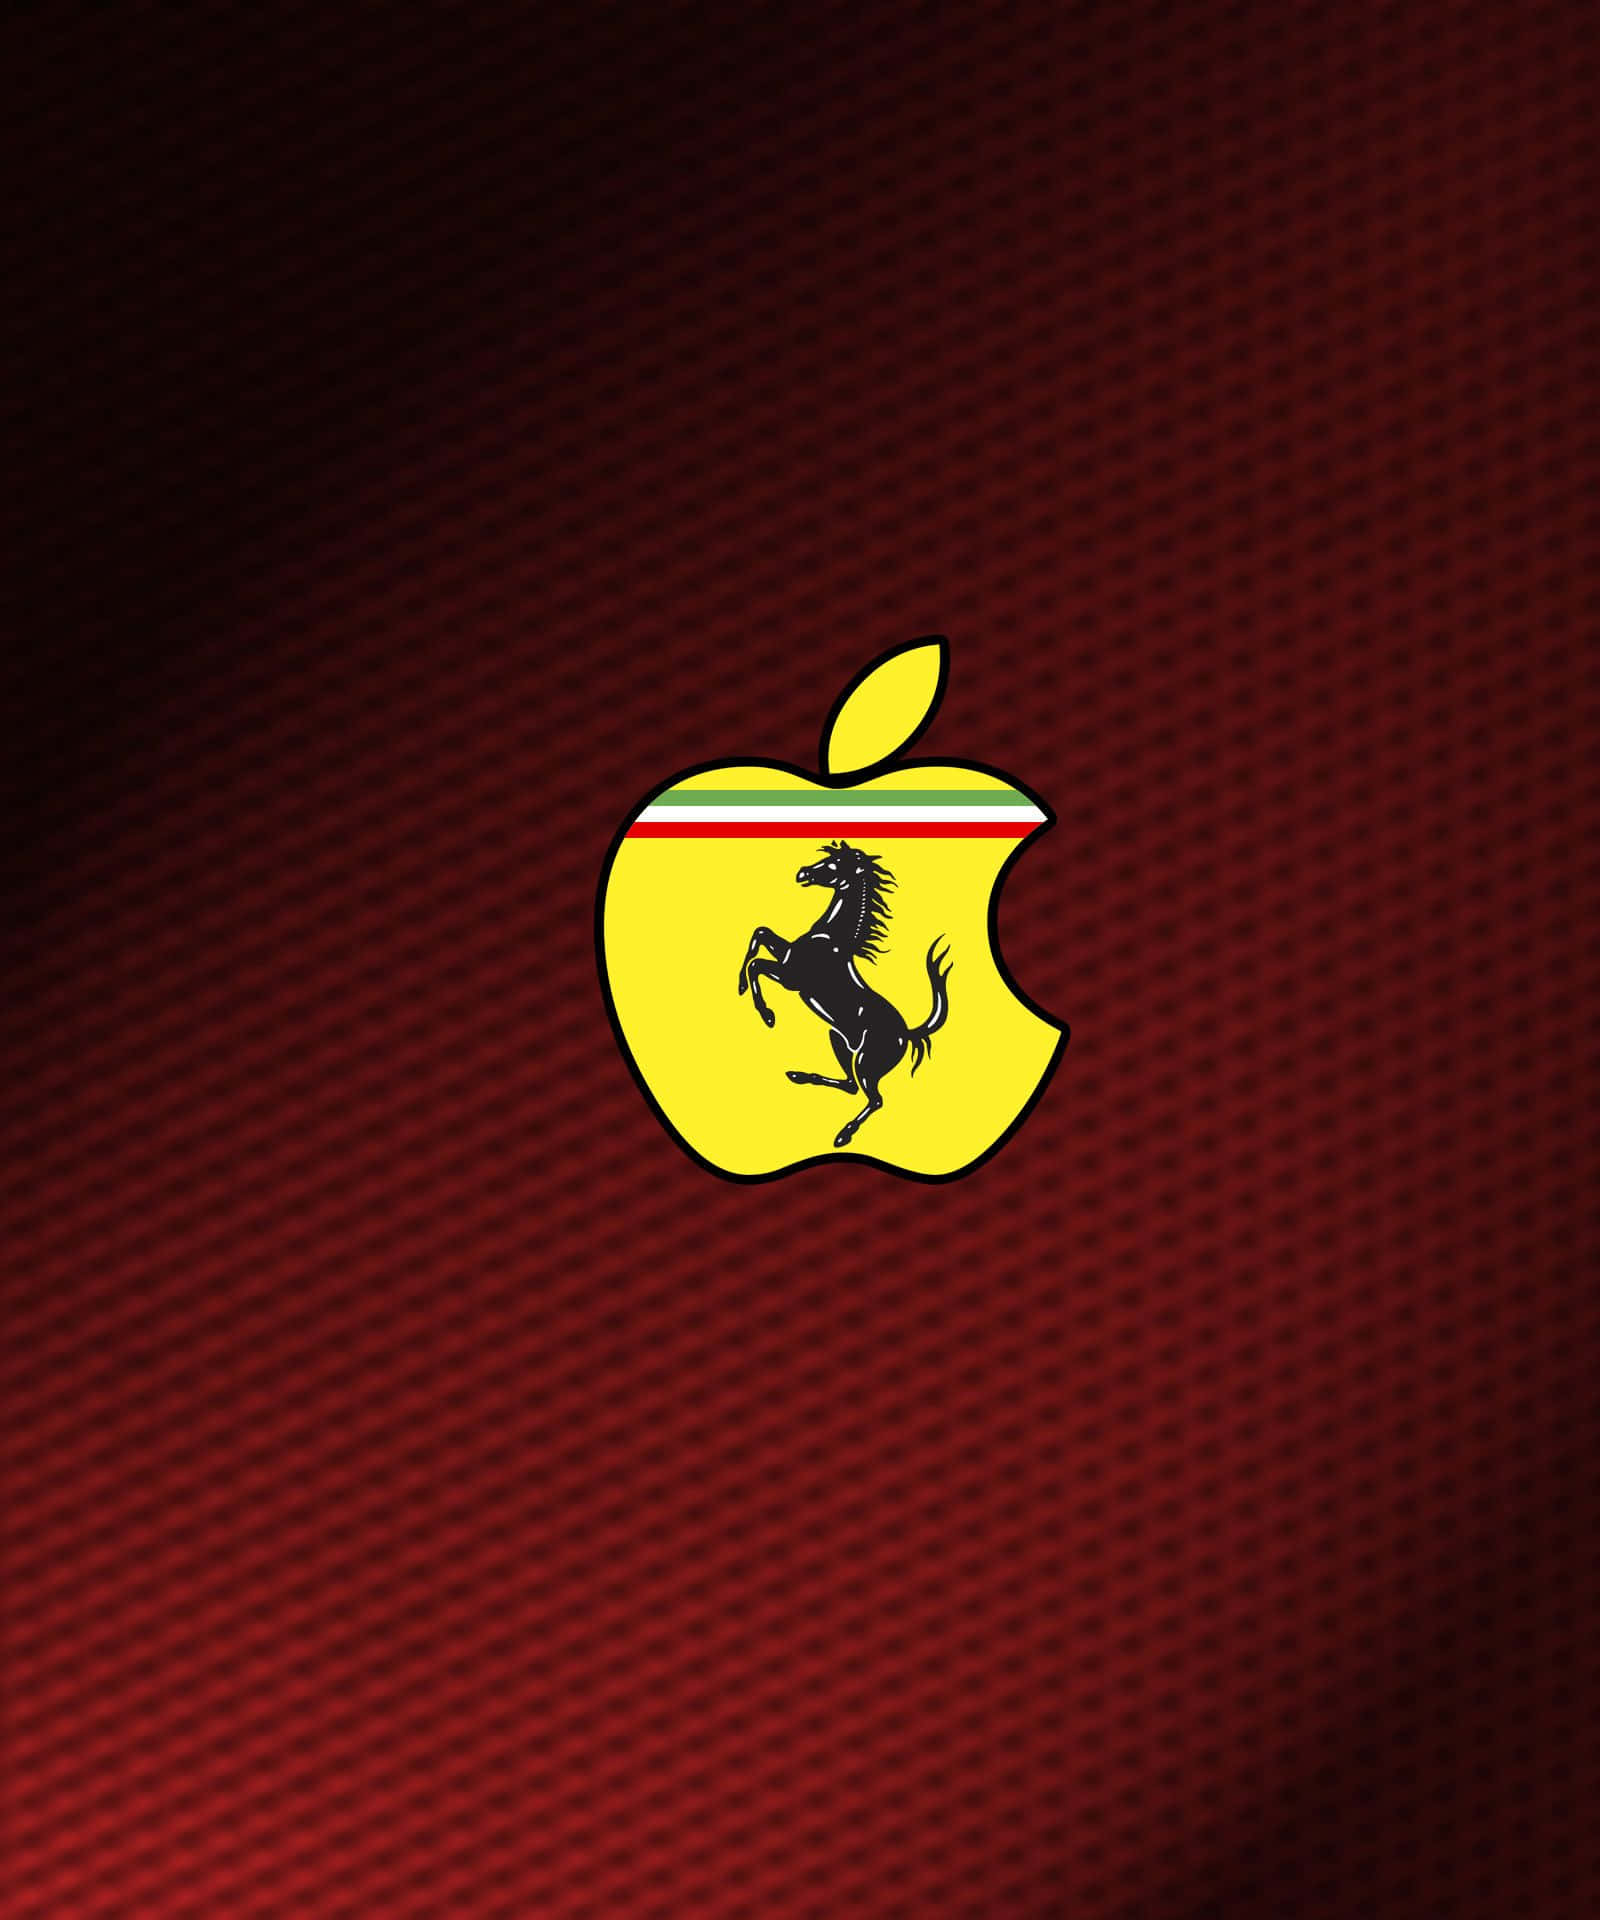 Cool Apple Ferrari Logo Wallpaper